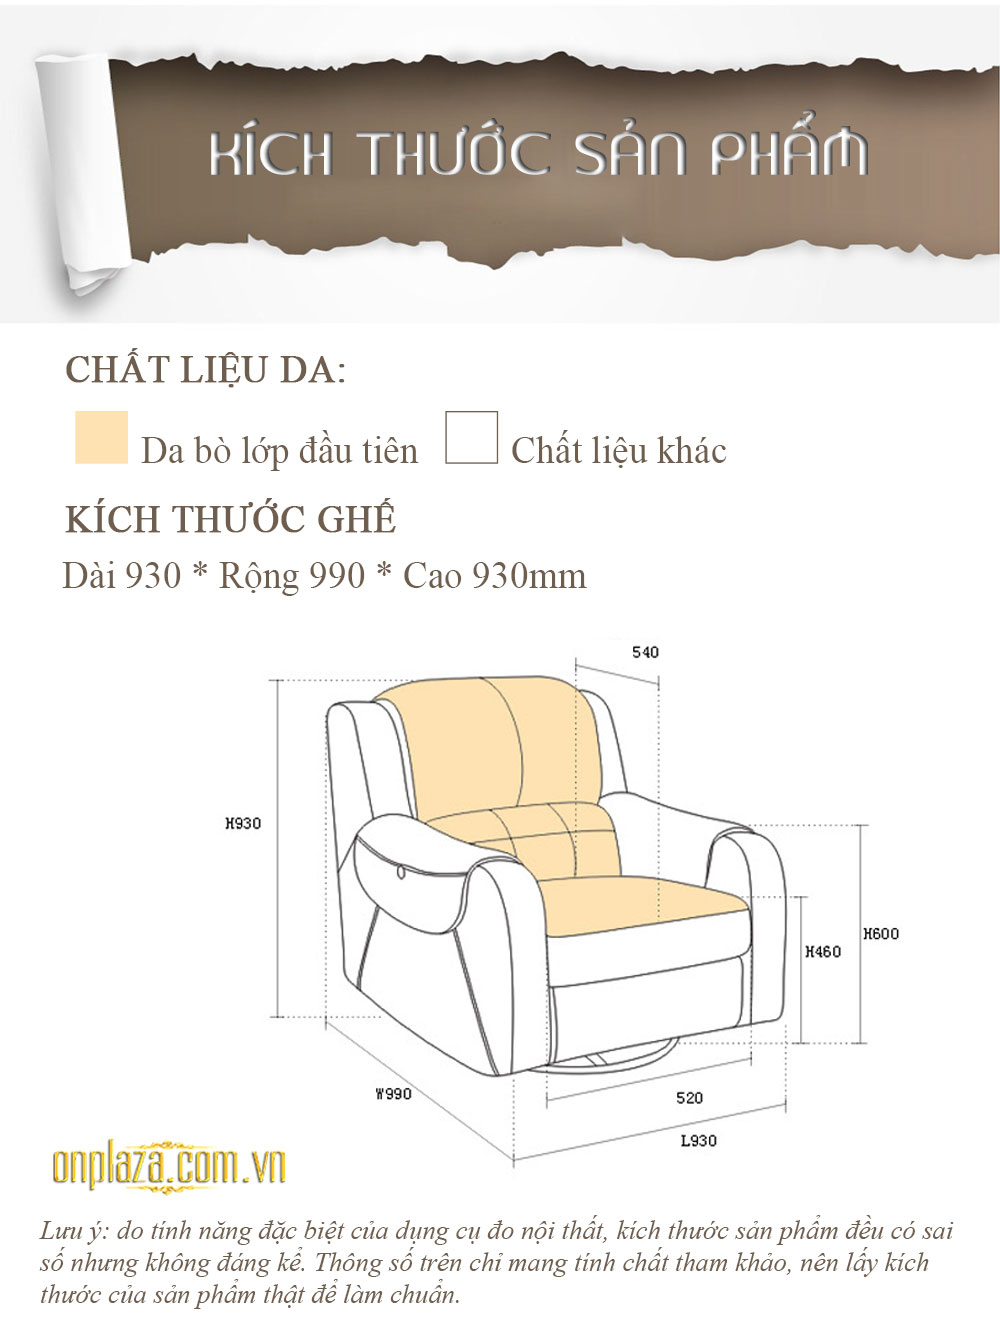 Ghế sofa thư giãn hiện đại SF18